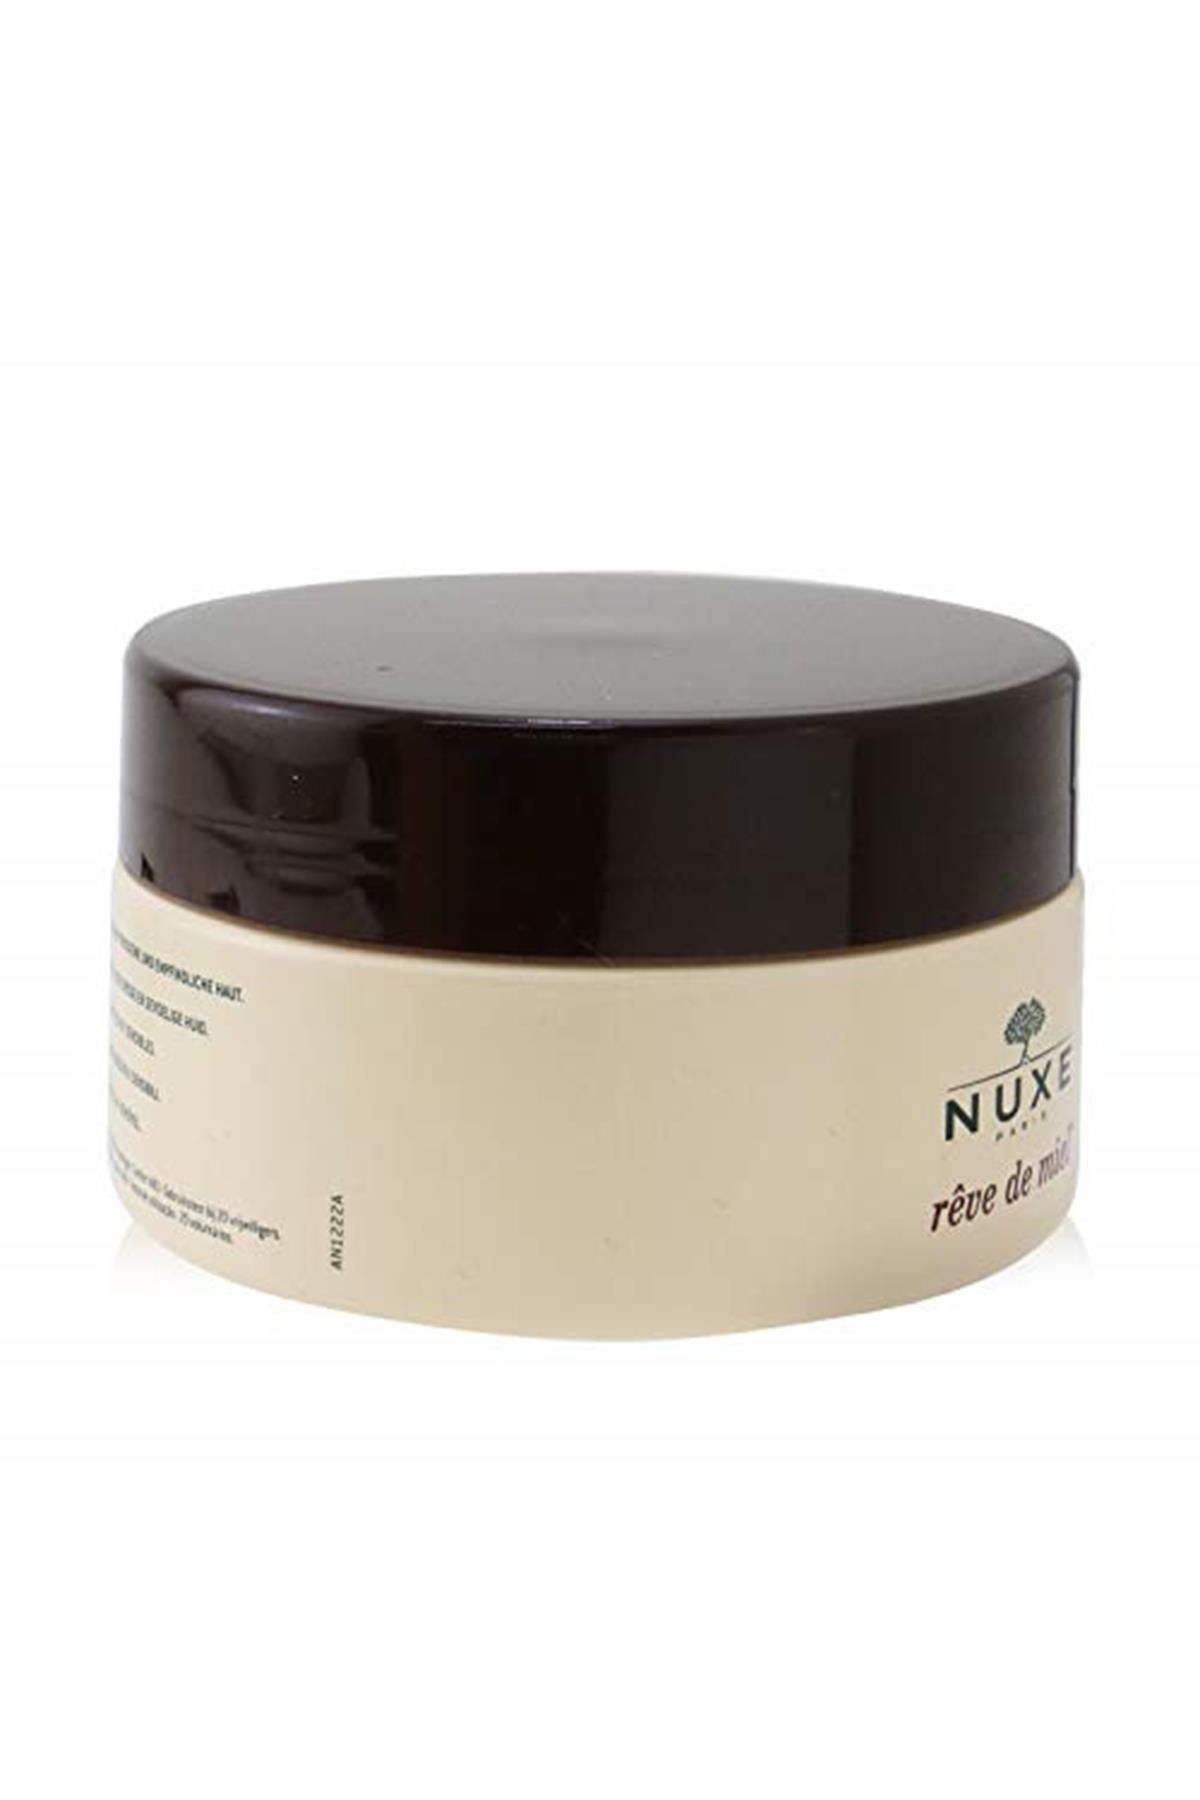 Nuxe روغن بدن ملایم کننده با عسل ذوب شده